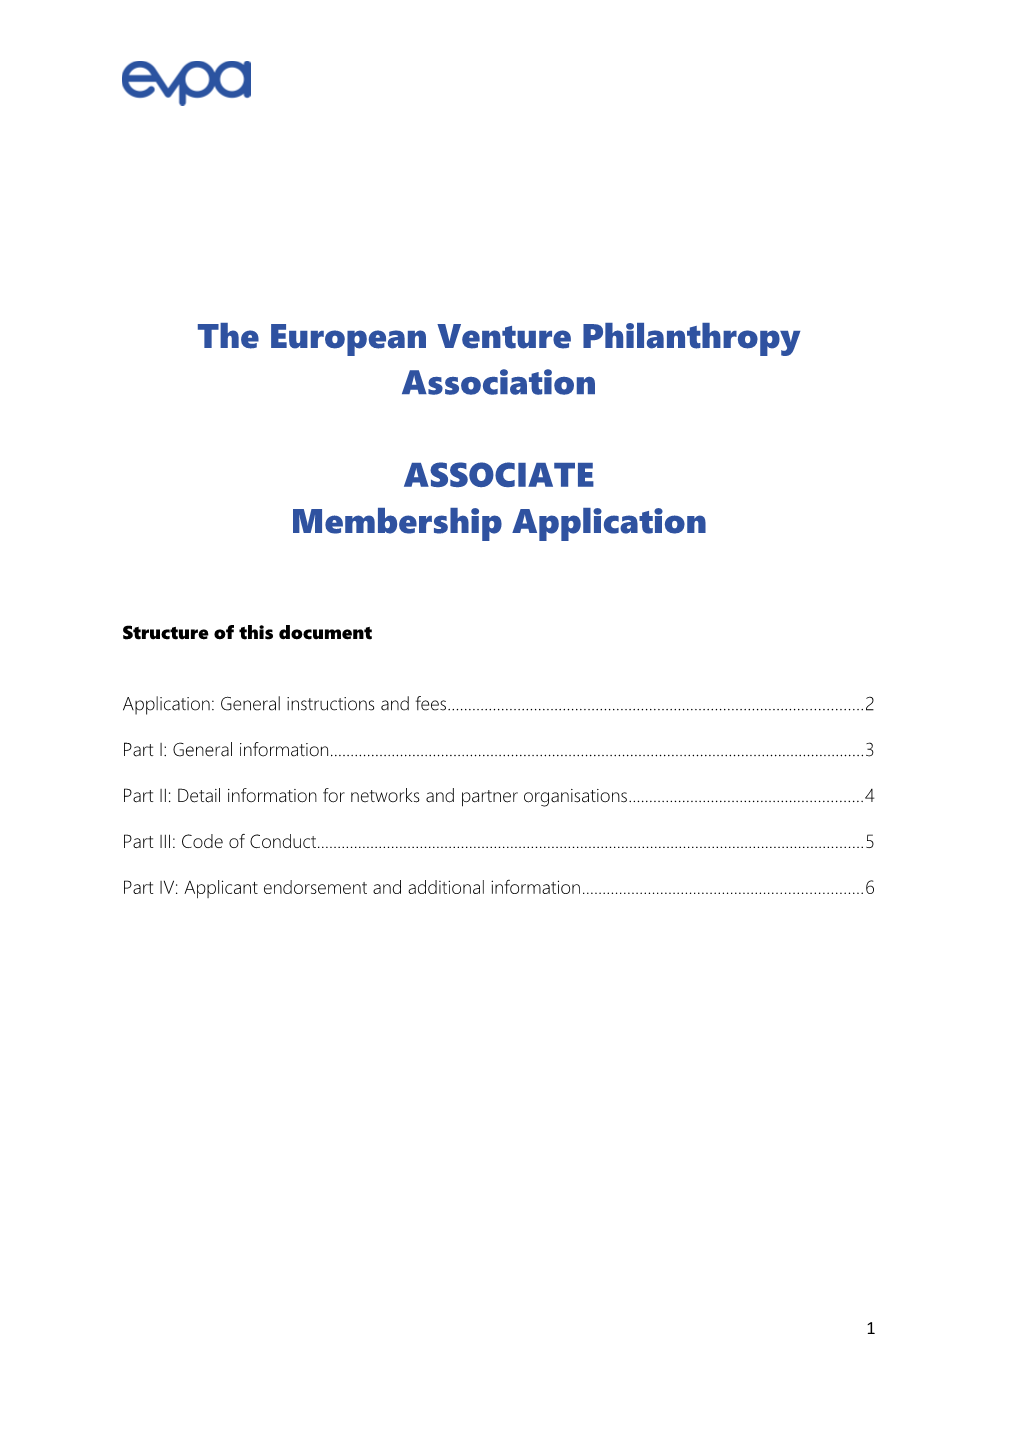 The European Venture Philanthropy Association